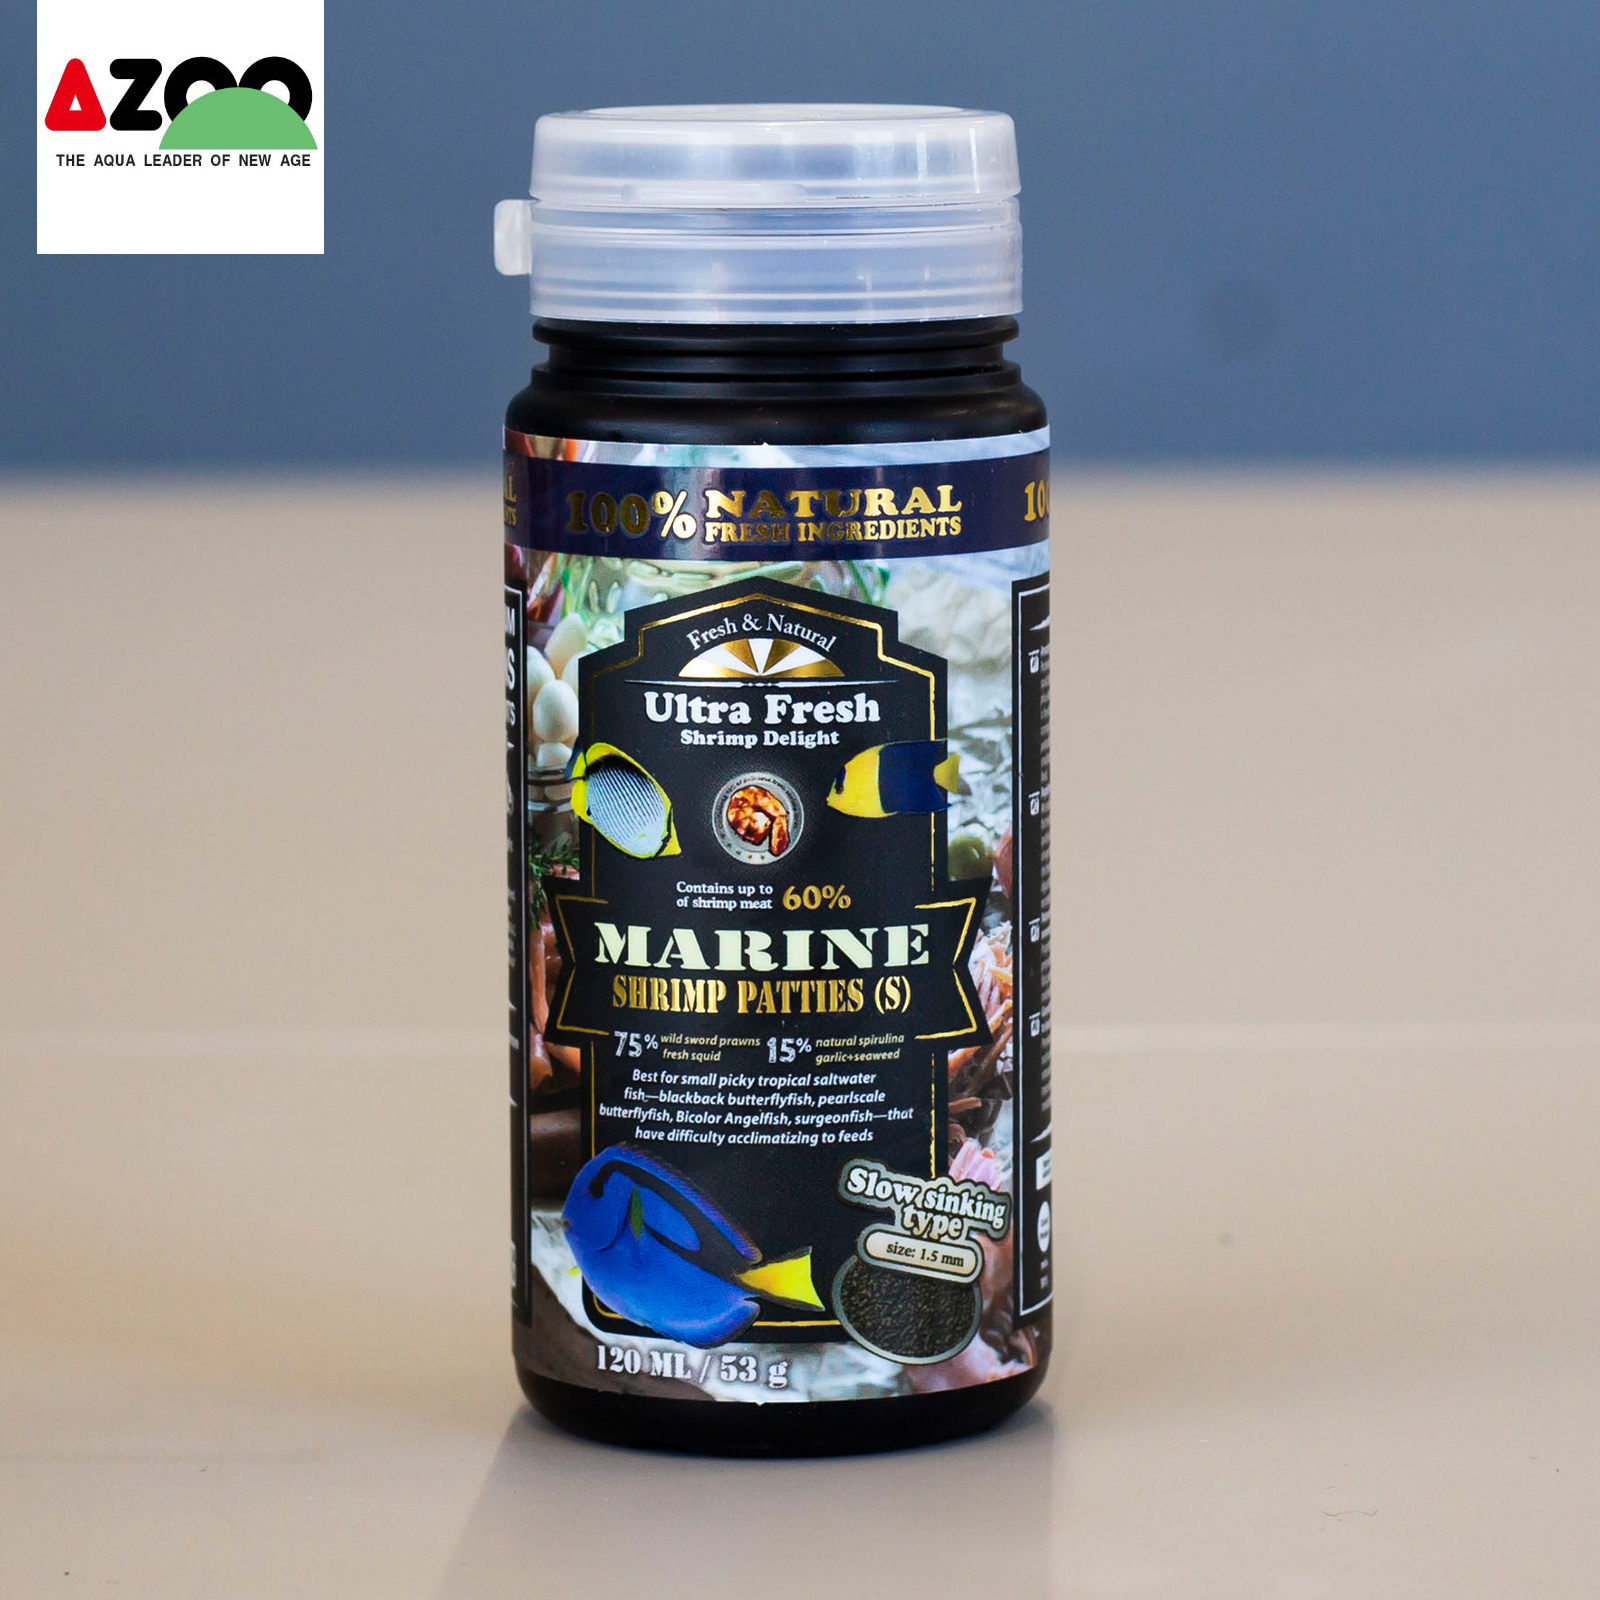 AZOO Marine Shrimp Patties(S) 120ml/53g